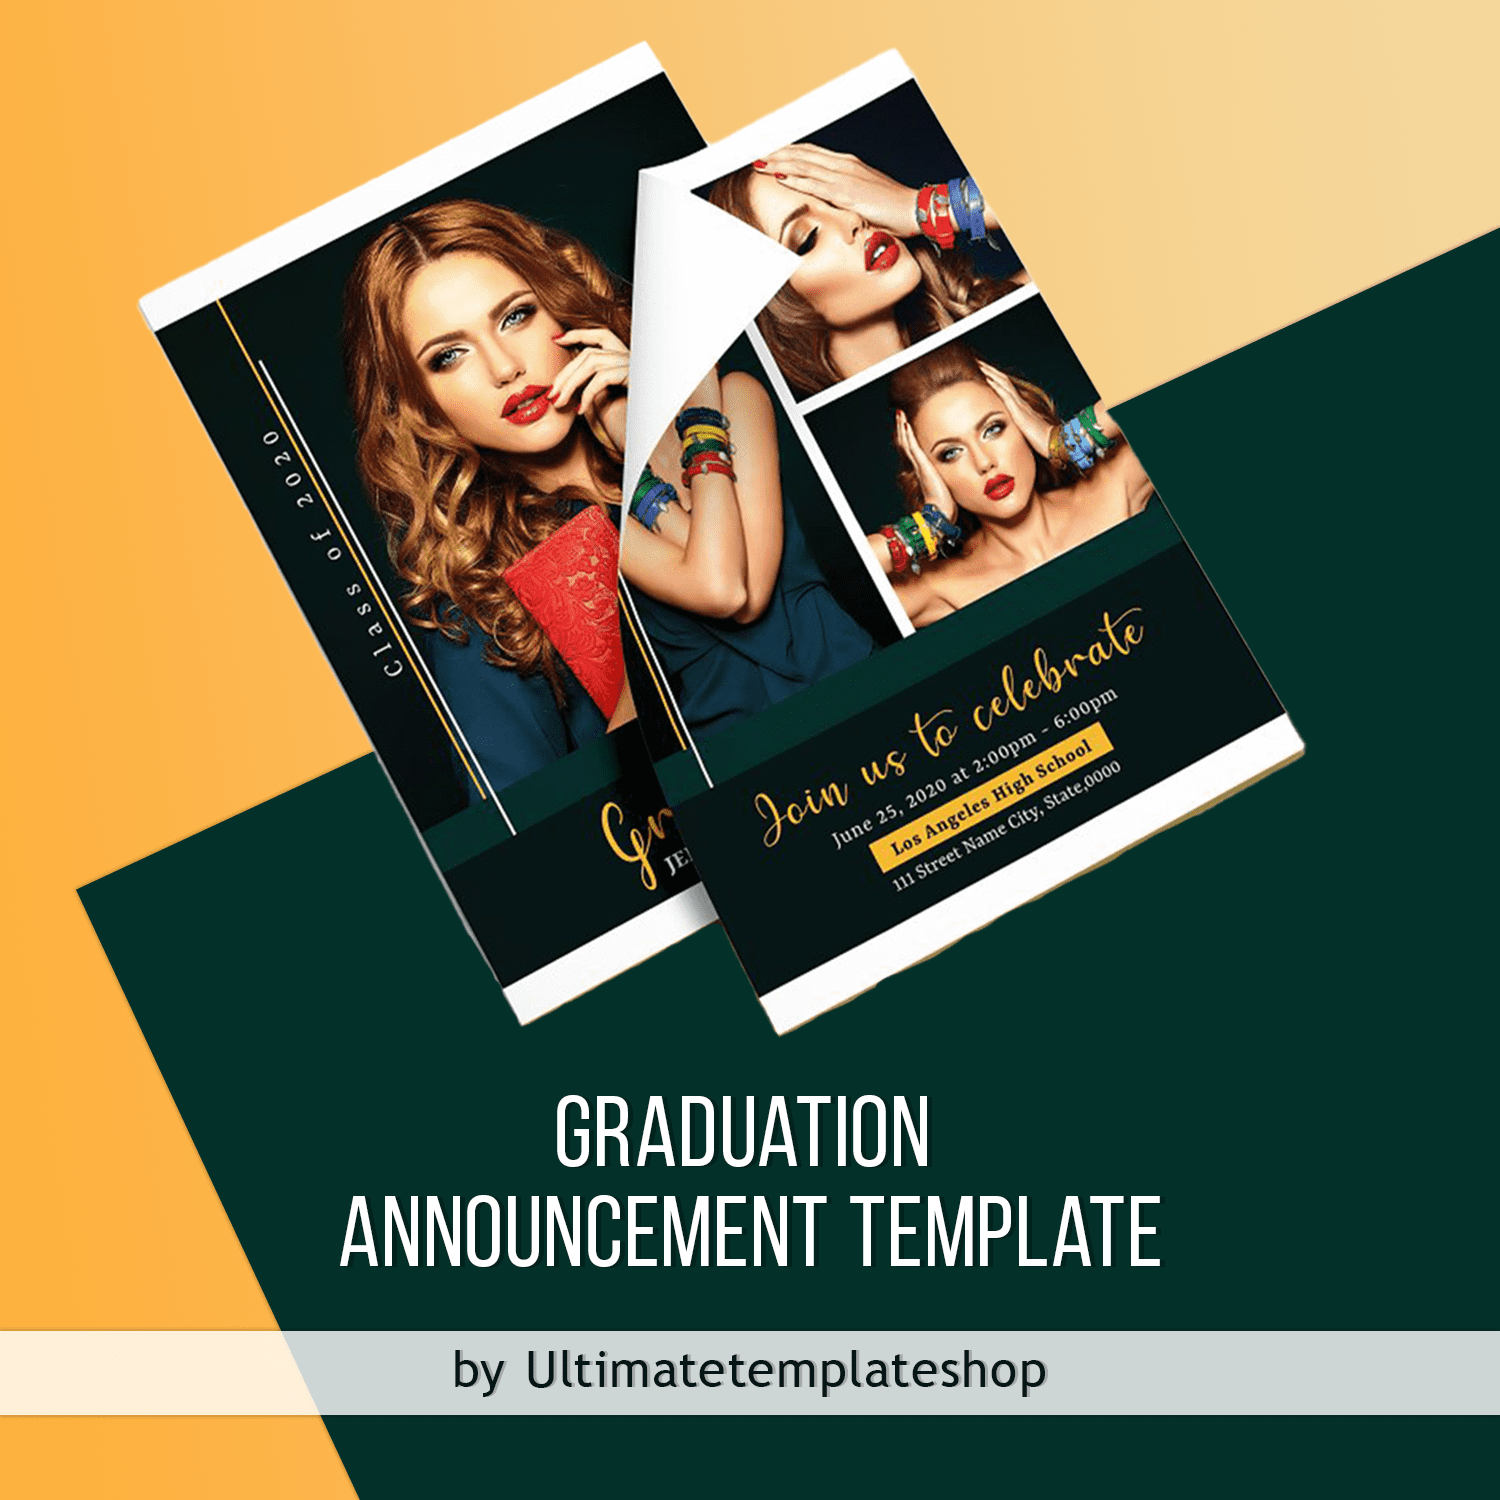 Graduation Announcement Template cover.